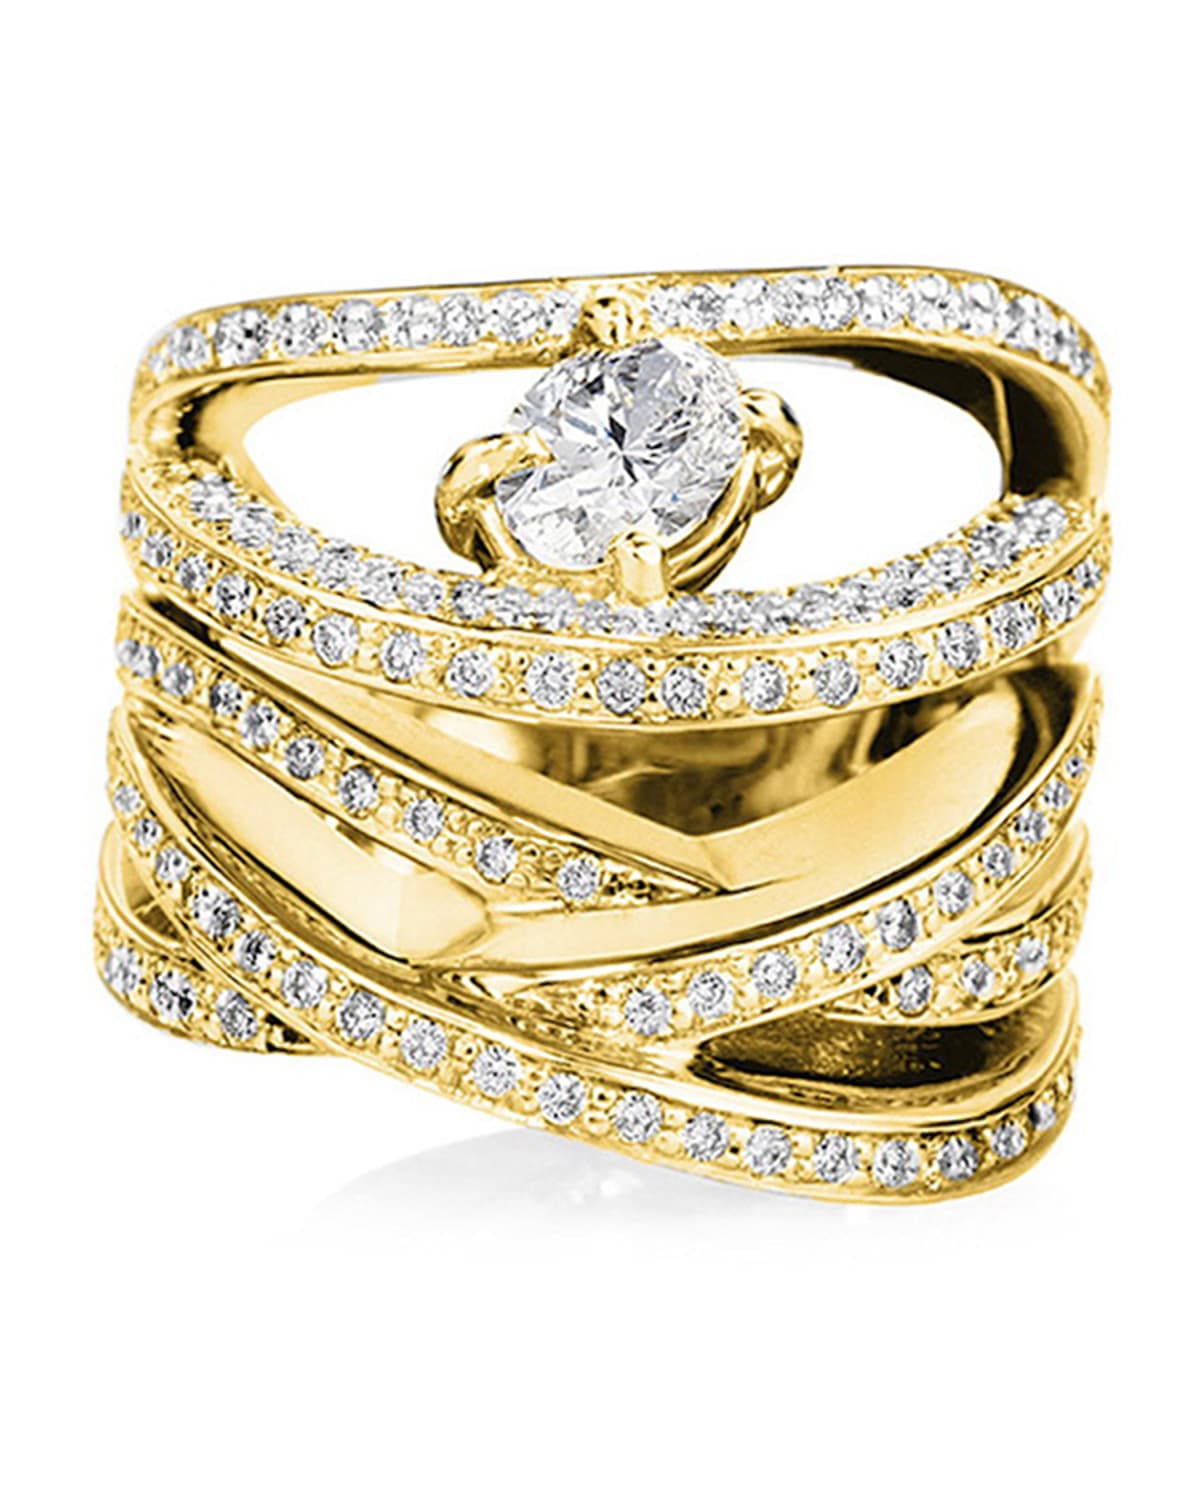 Mimi So 18k Diamond Multi-Row Ring, Size 7